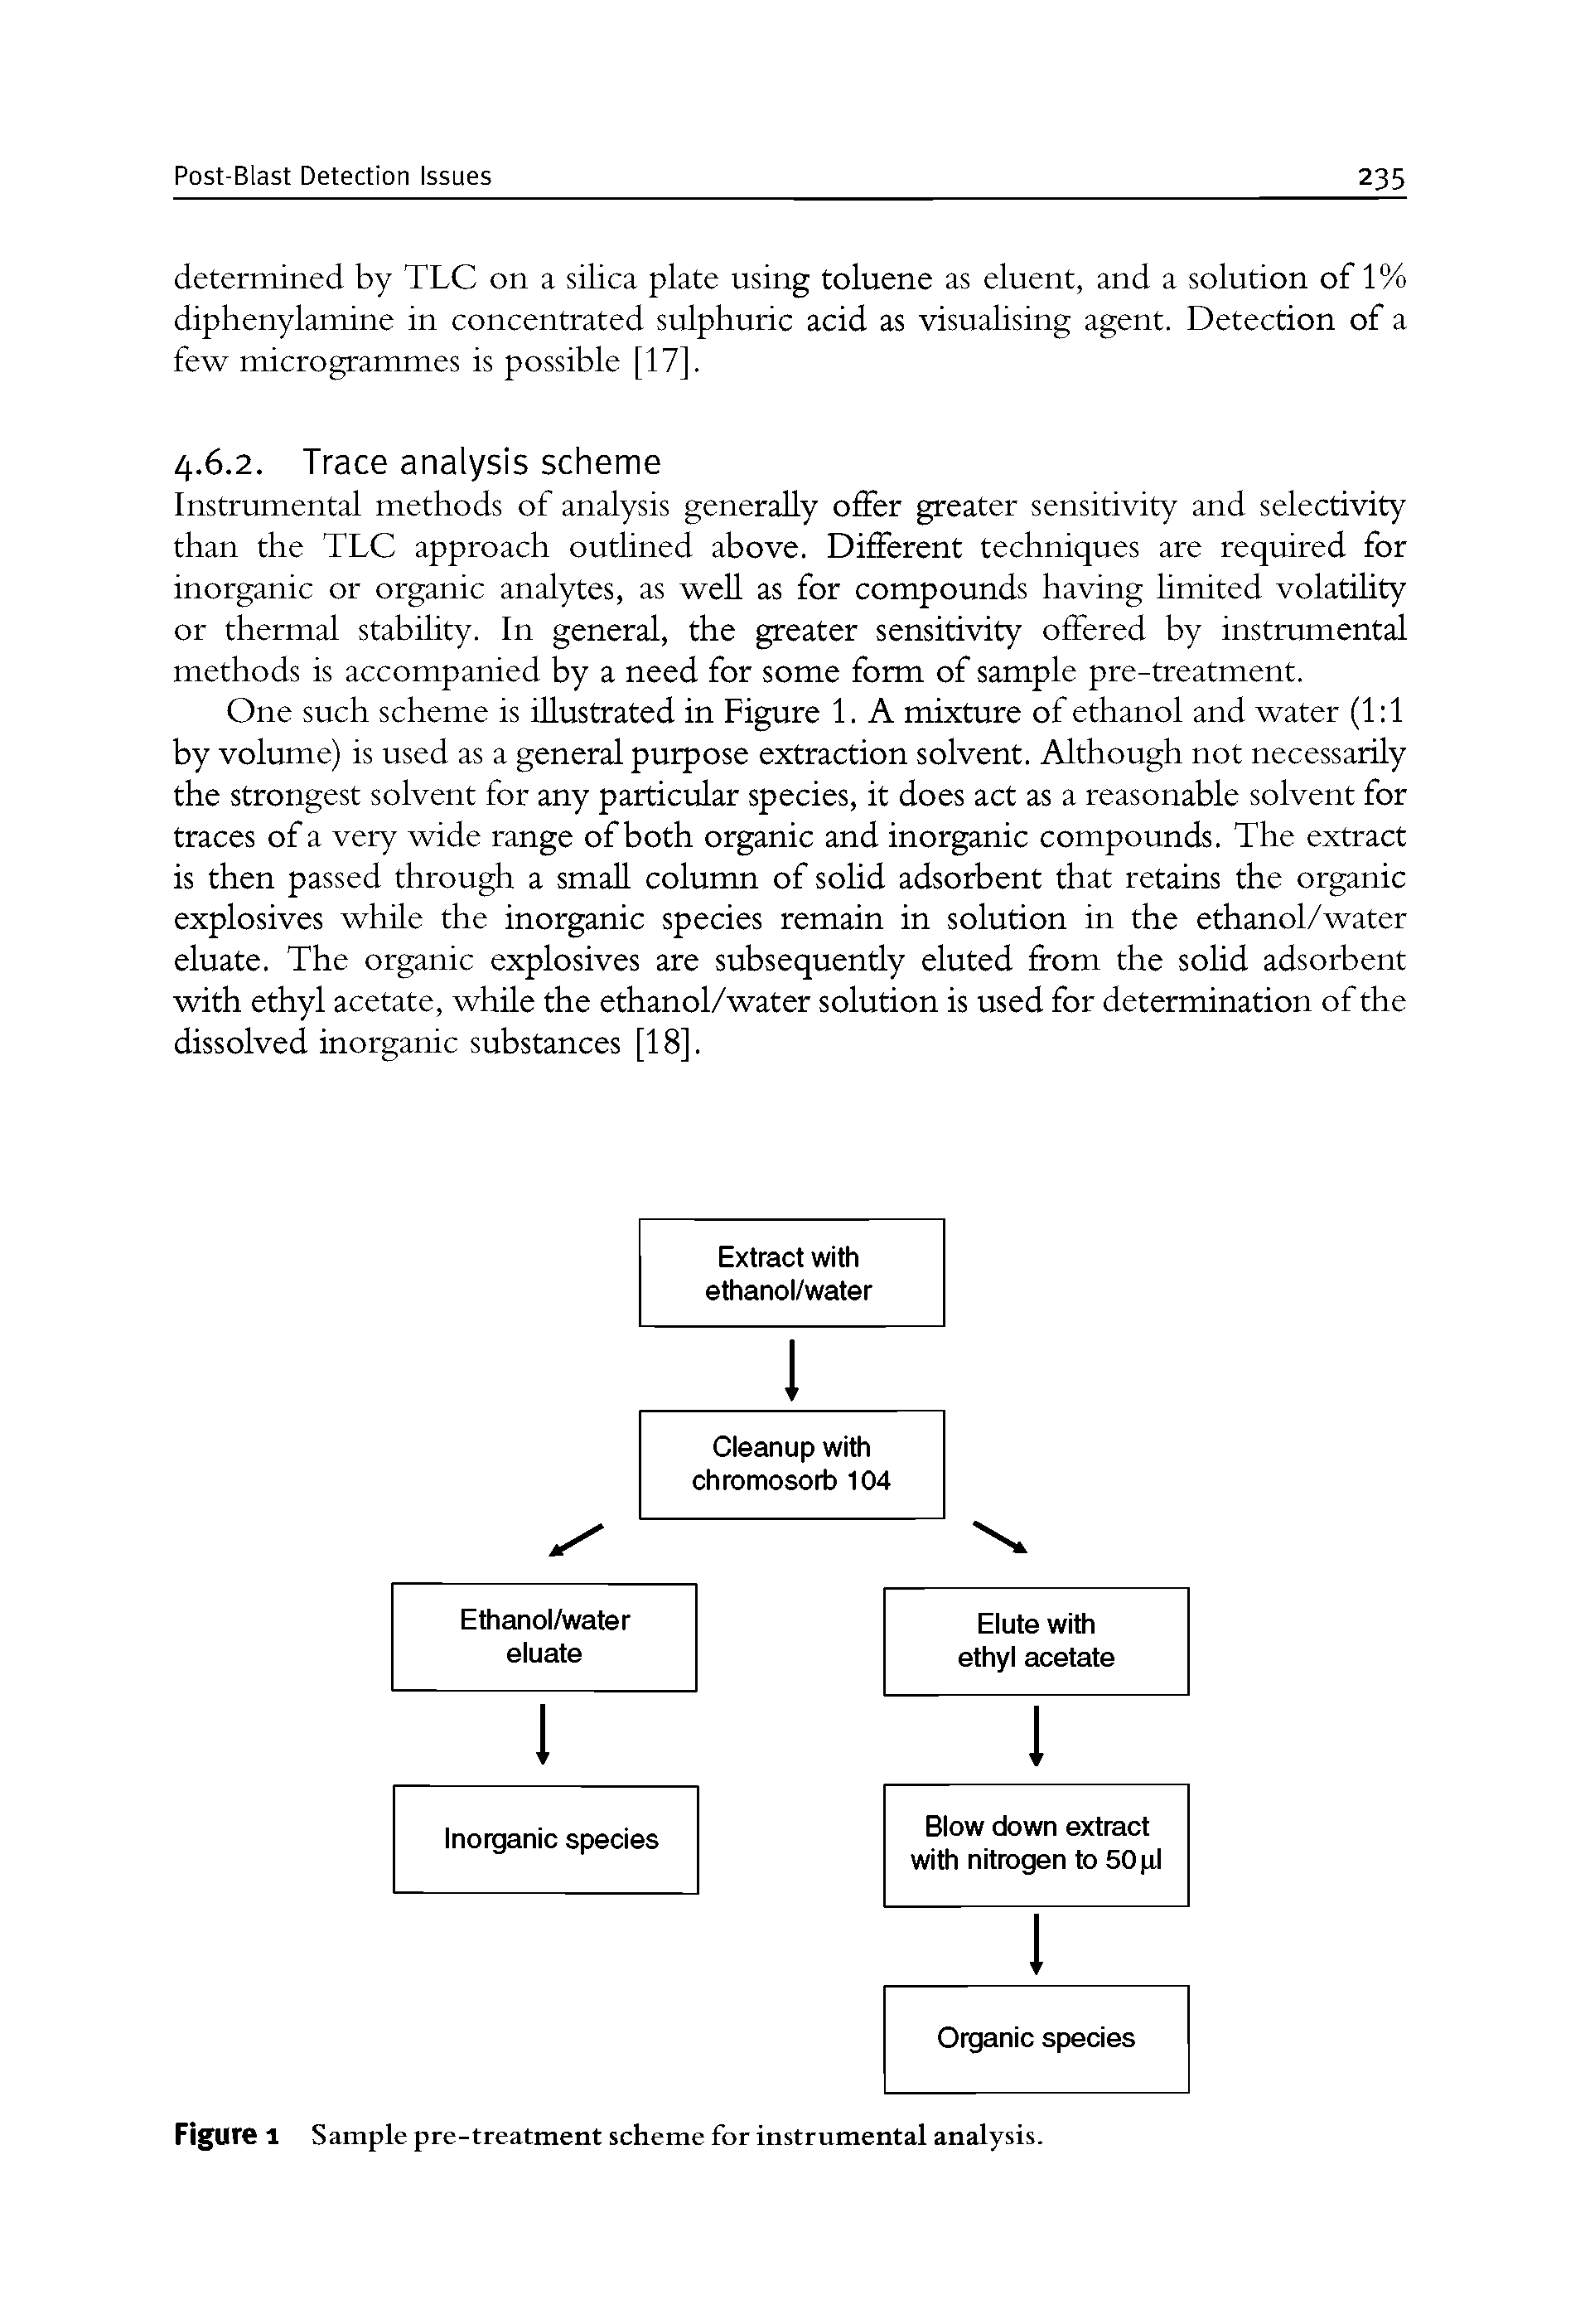 Figure 1 Sample pre-treatment scheme for instrumental analysis.